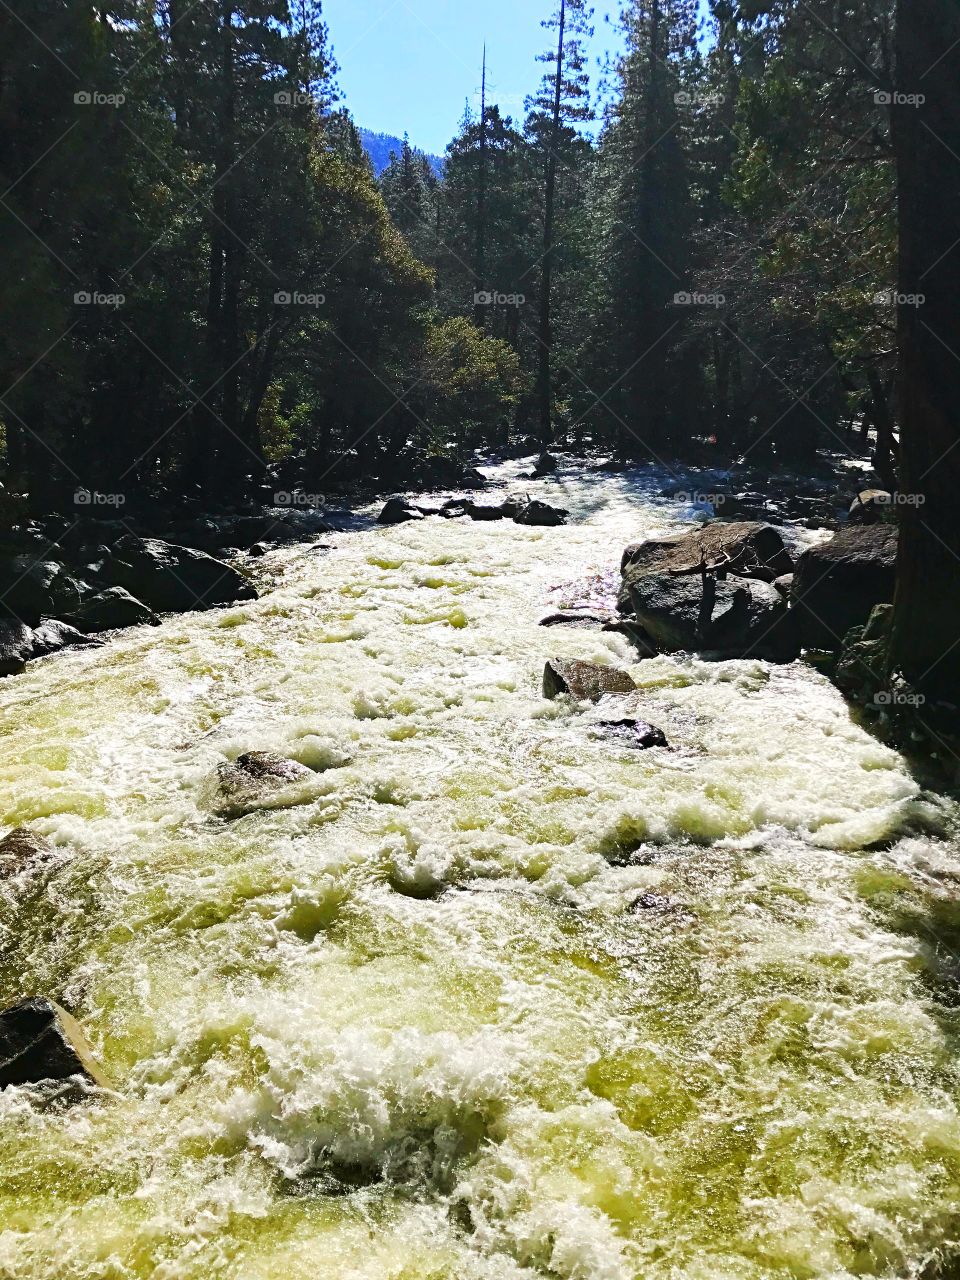 Yosemite rapids